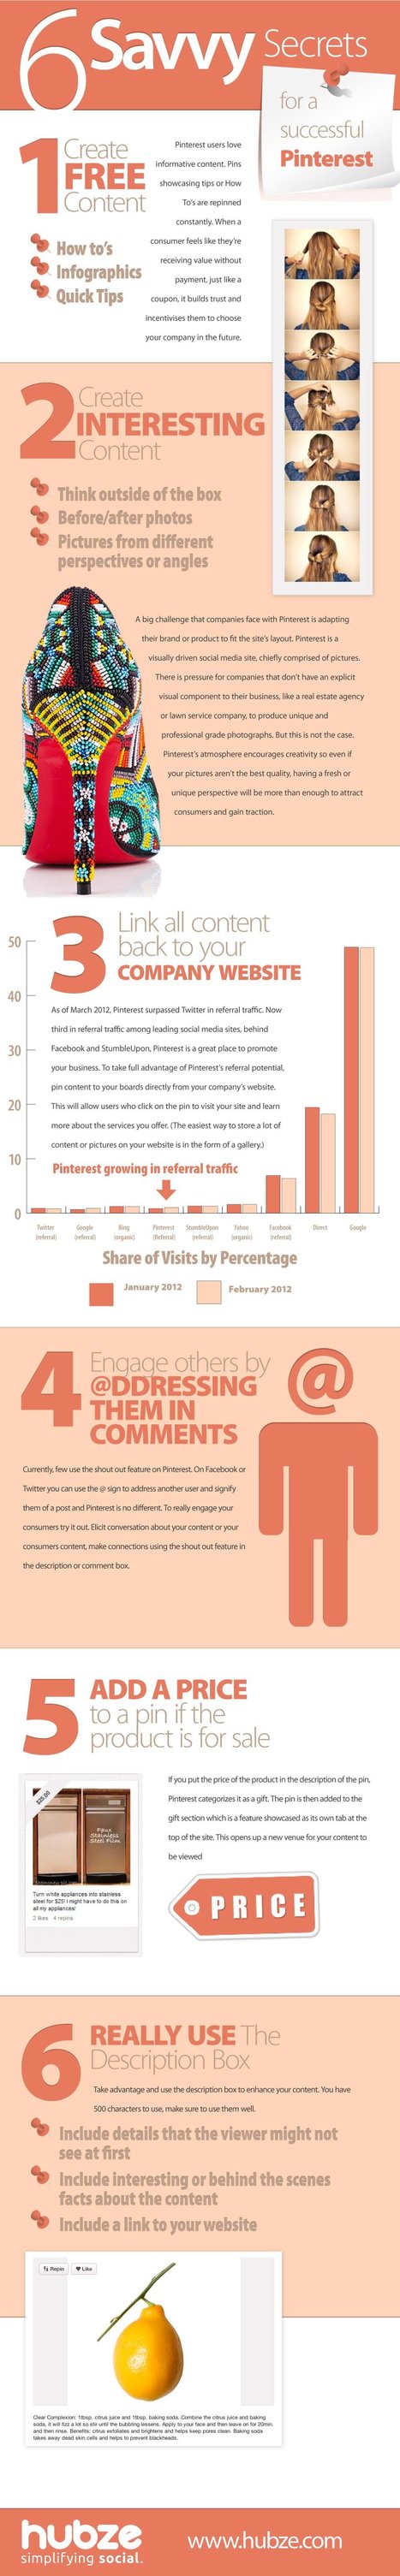 Marketing Secrets For Success On Pinterest [Infographic] | MarketingHits | Scoop.it